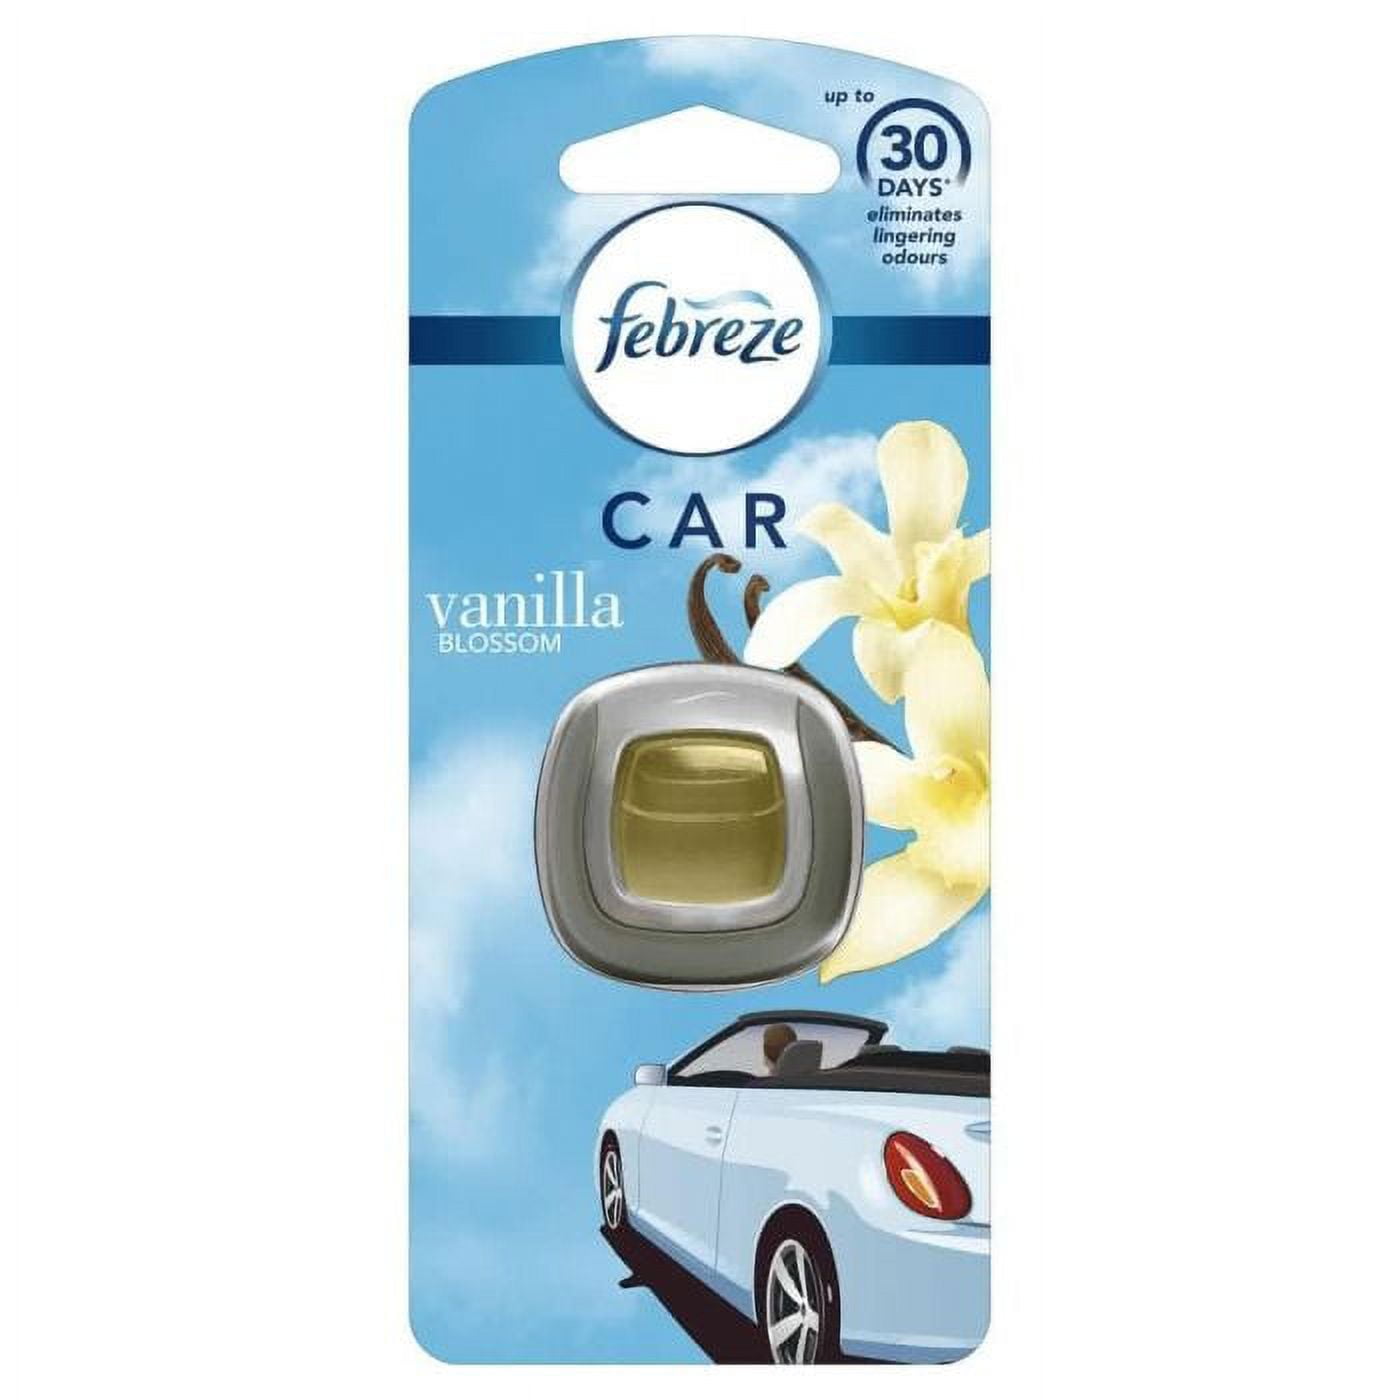 Febreze Car Air Freshener Vent Clips Assorted Scents, 5 Count 